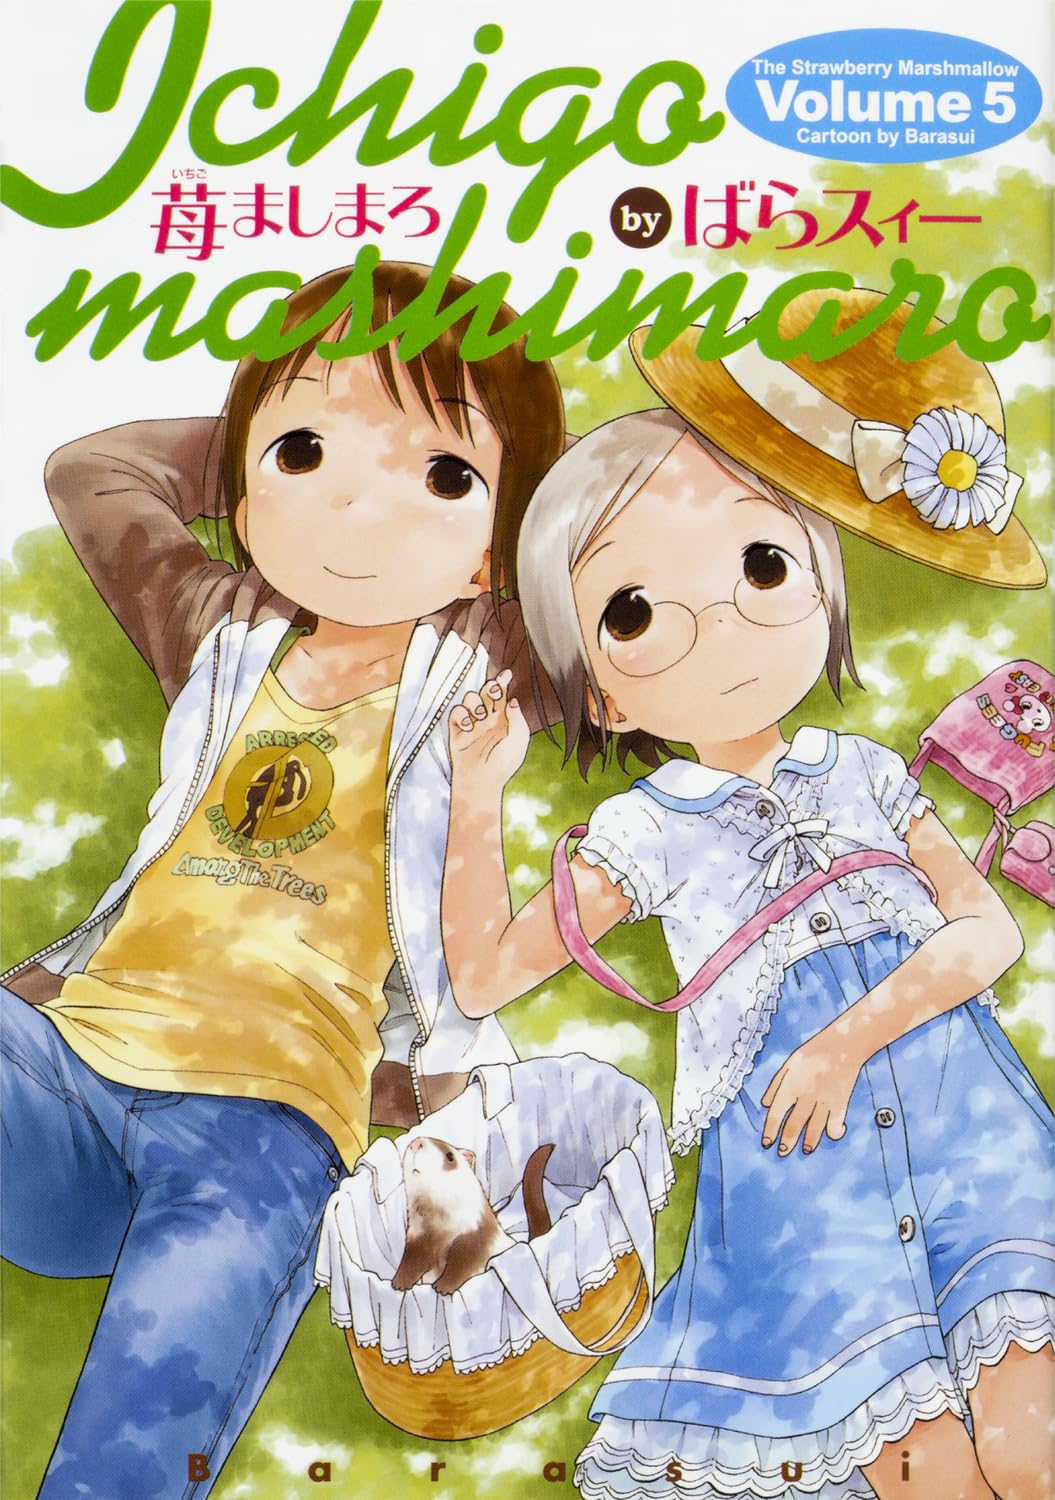 Ichigomashimaro volume5.jpg